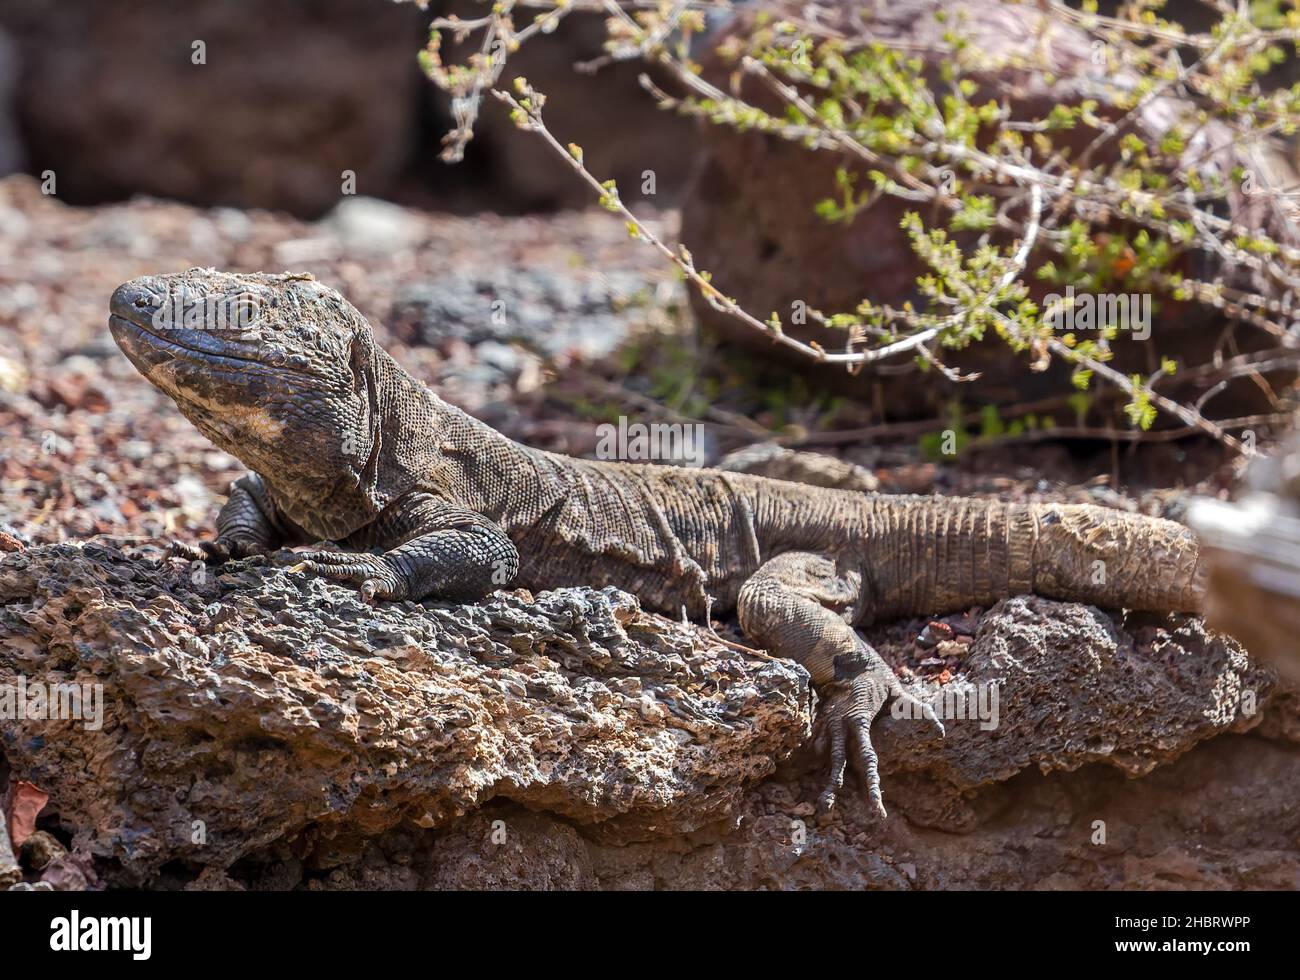 Close-up view of a Giant El Hierro Lizard (Gallotia simonyi) Stock Photo